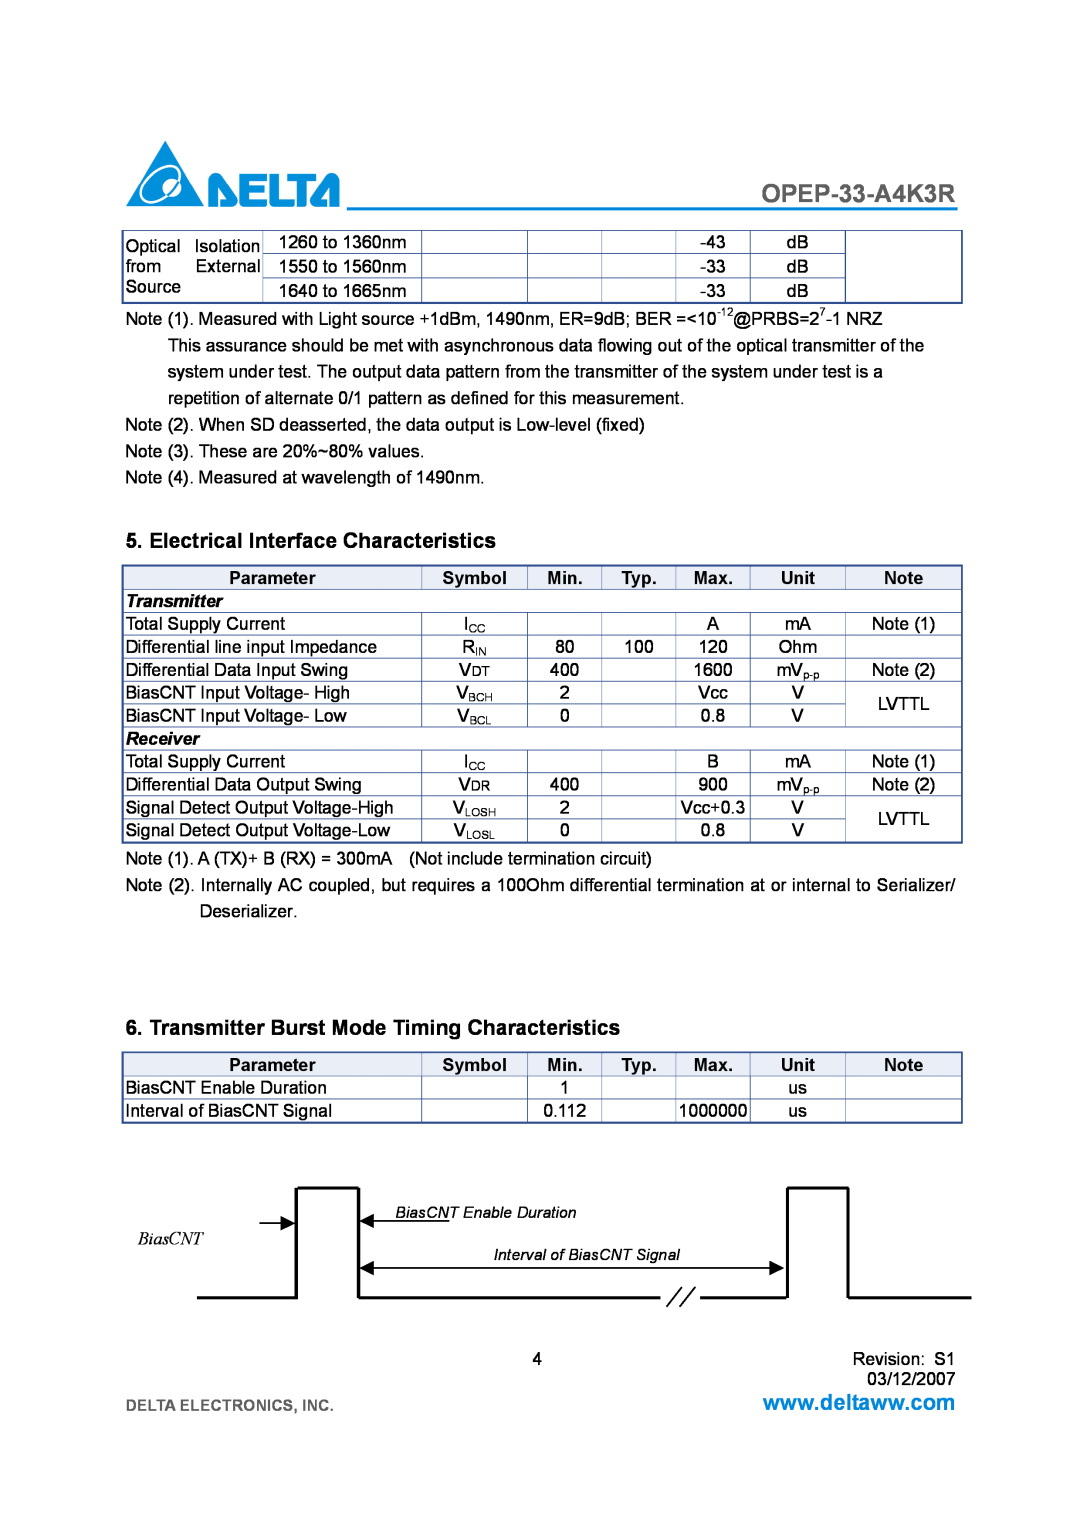 Delta Electronics OPEP-33-A4K3R manual Electrical Interface Characteristics, Transmitter Burst Mode Timing Characteristics 